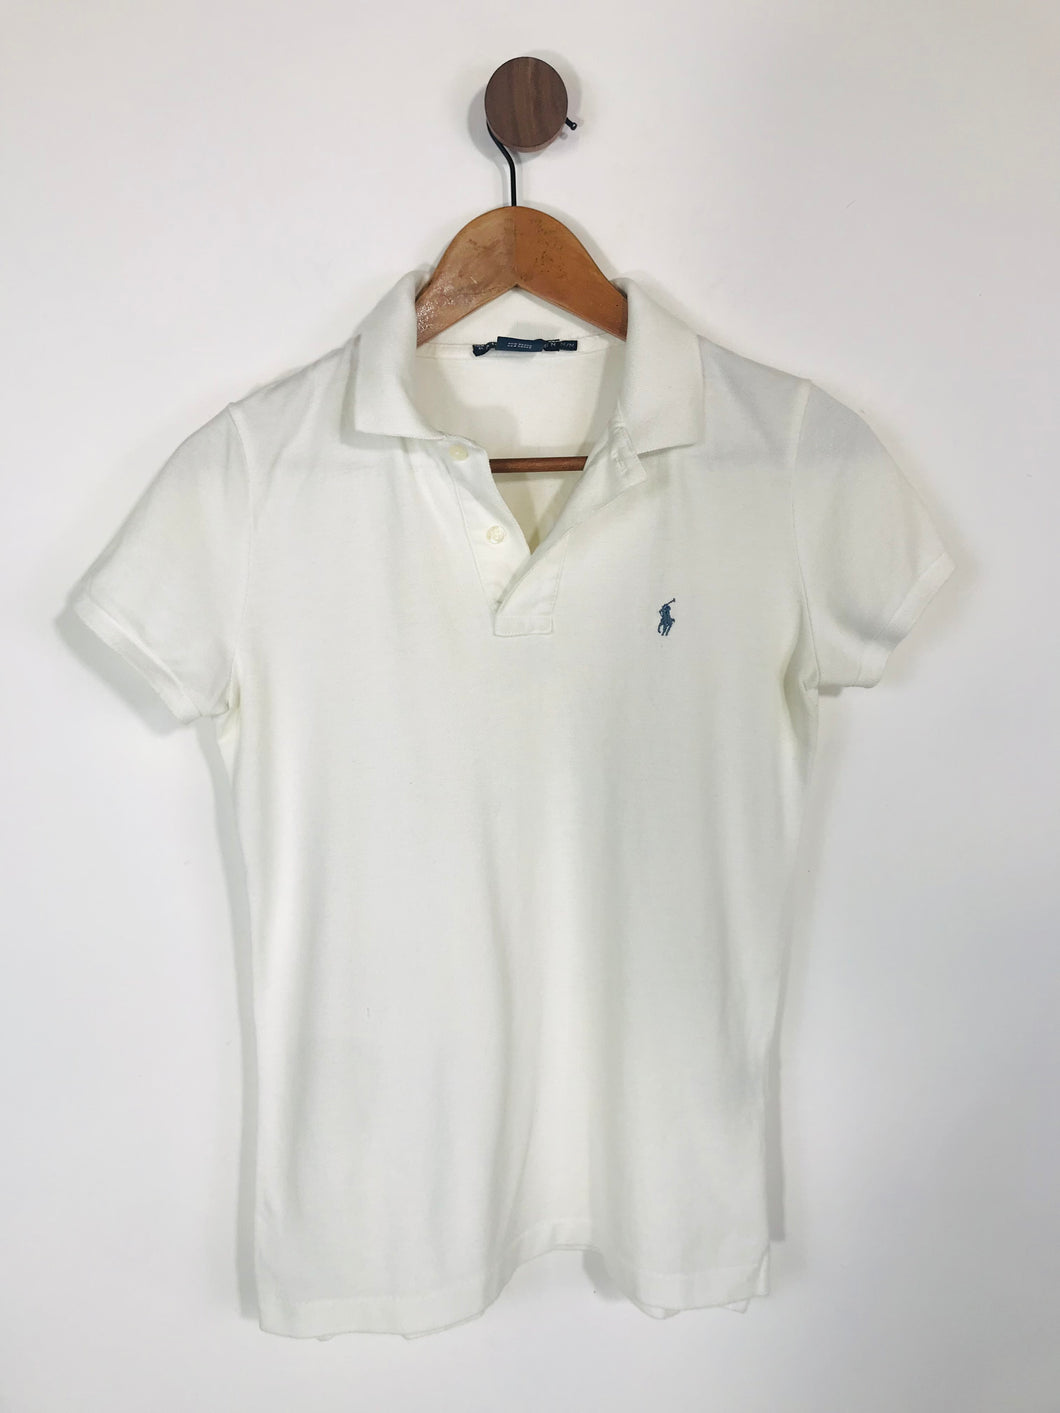 Ralph Lauren Women's Cotton Polo Shirt | M UK10-12 | White